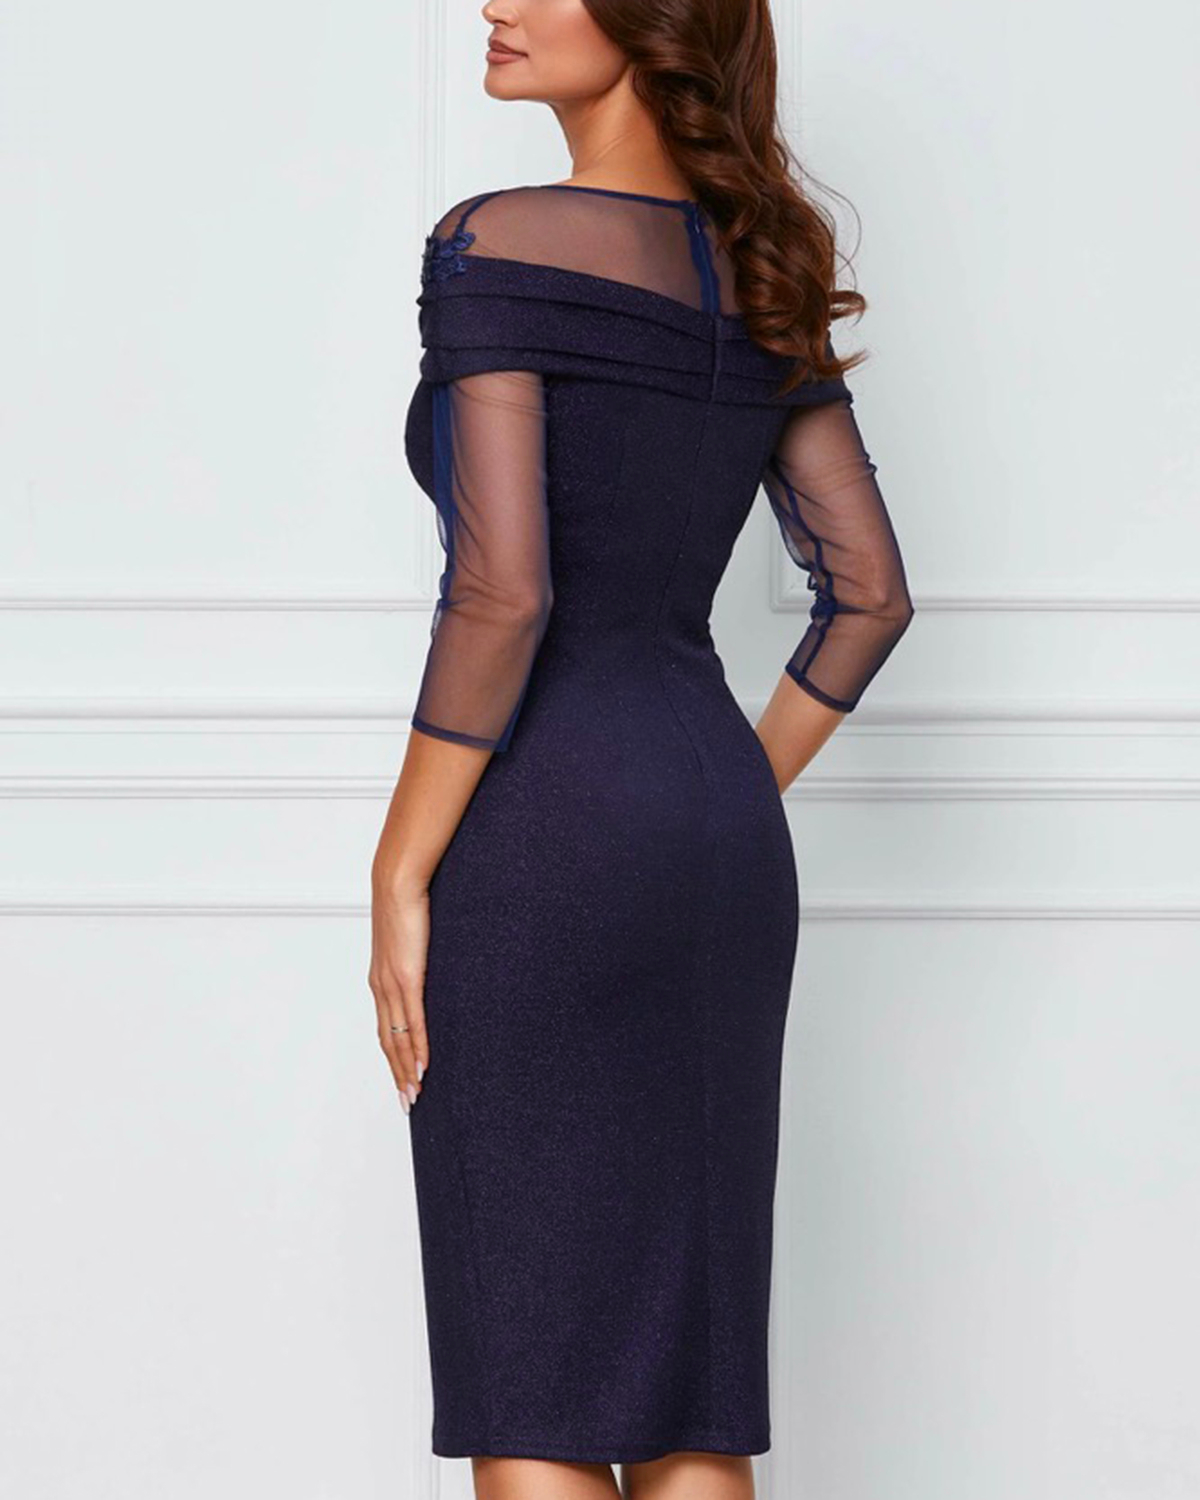 Women's Sequins Solid Color Dress - 01